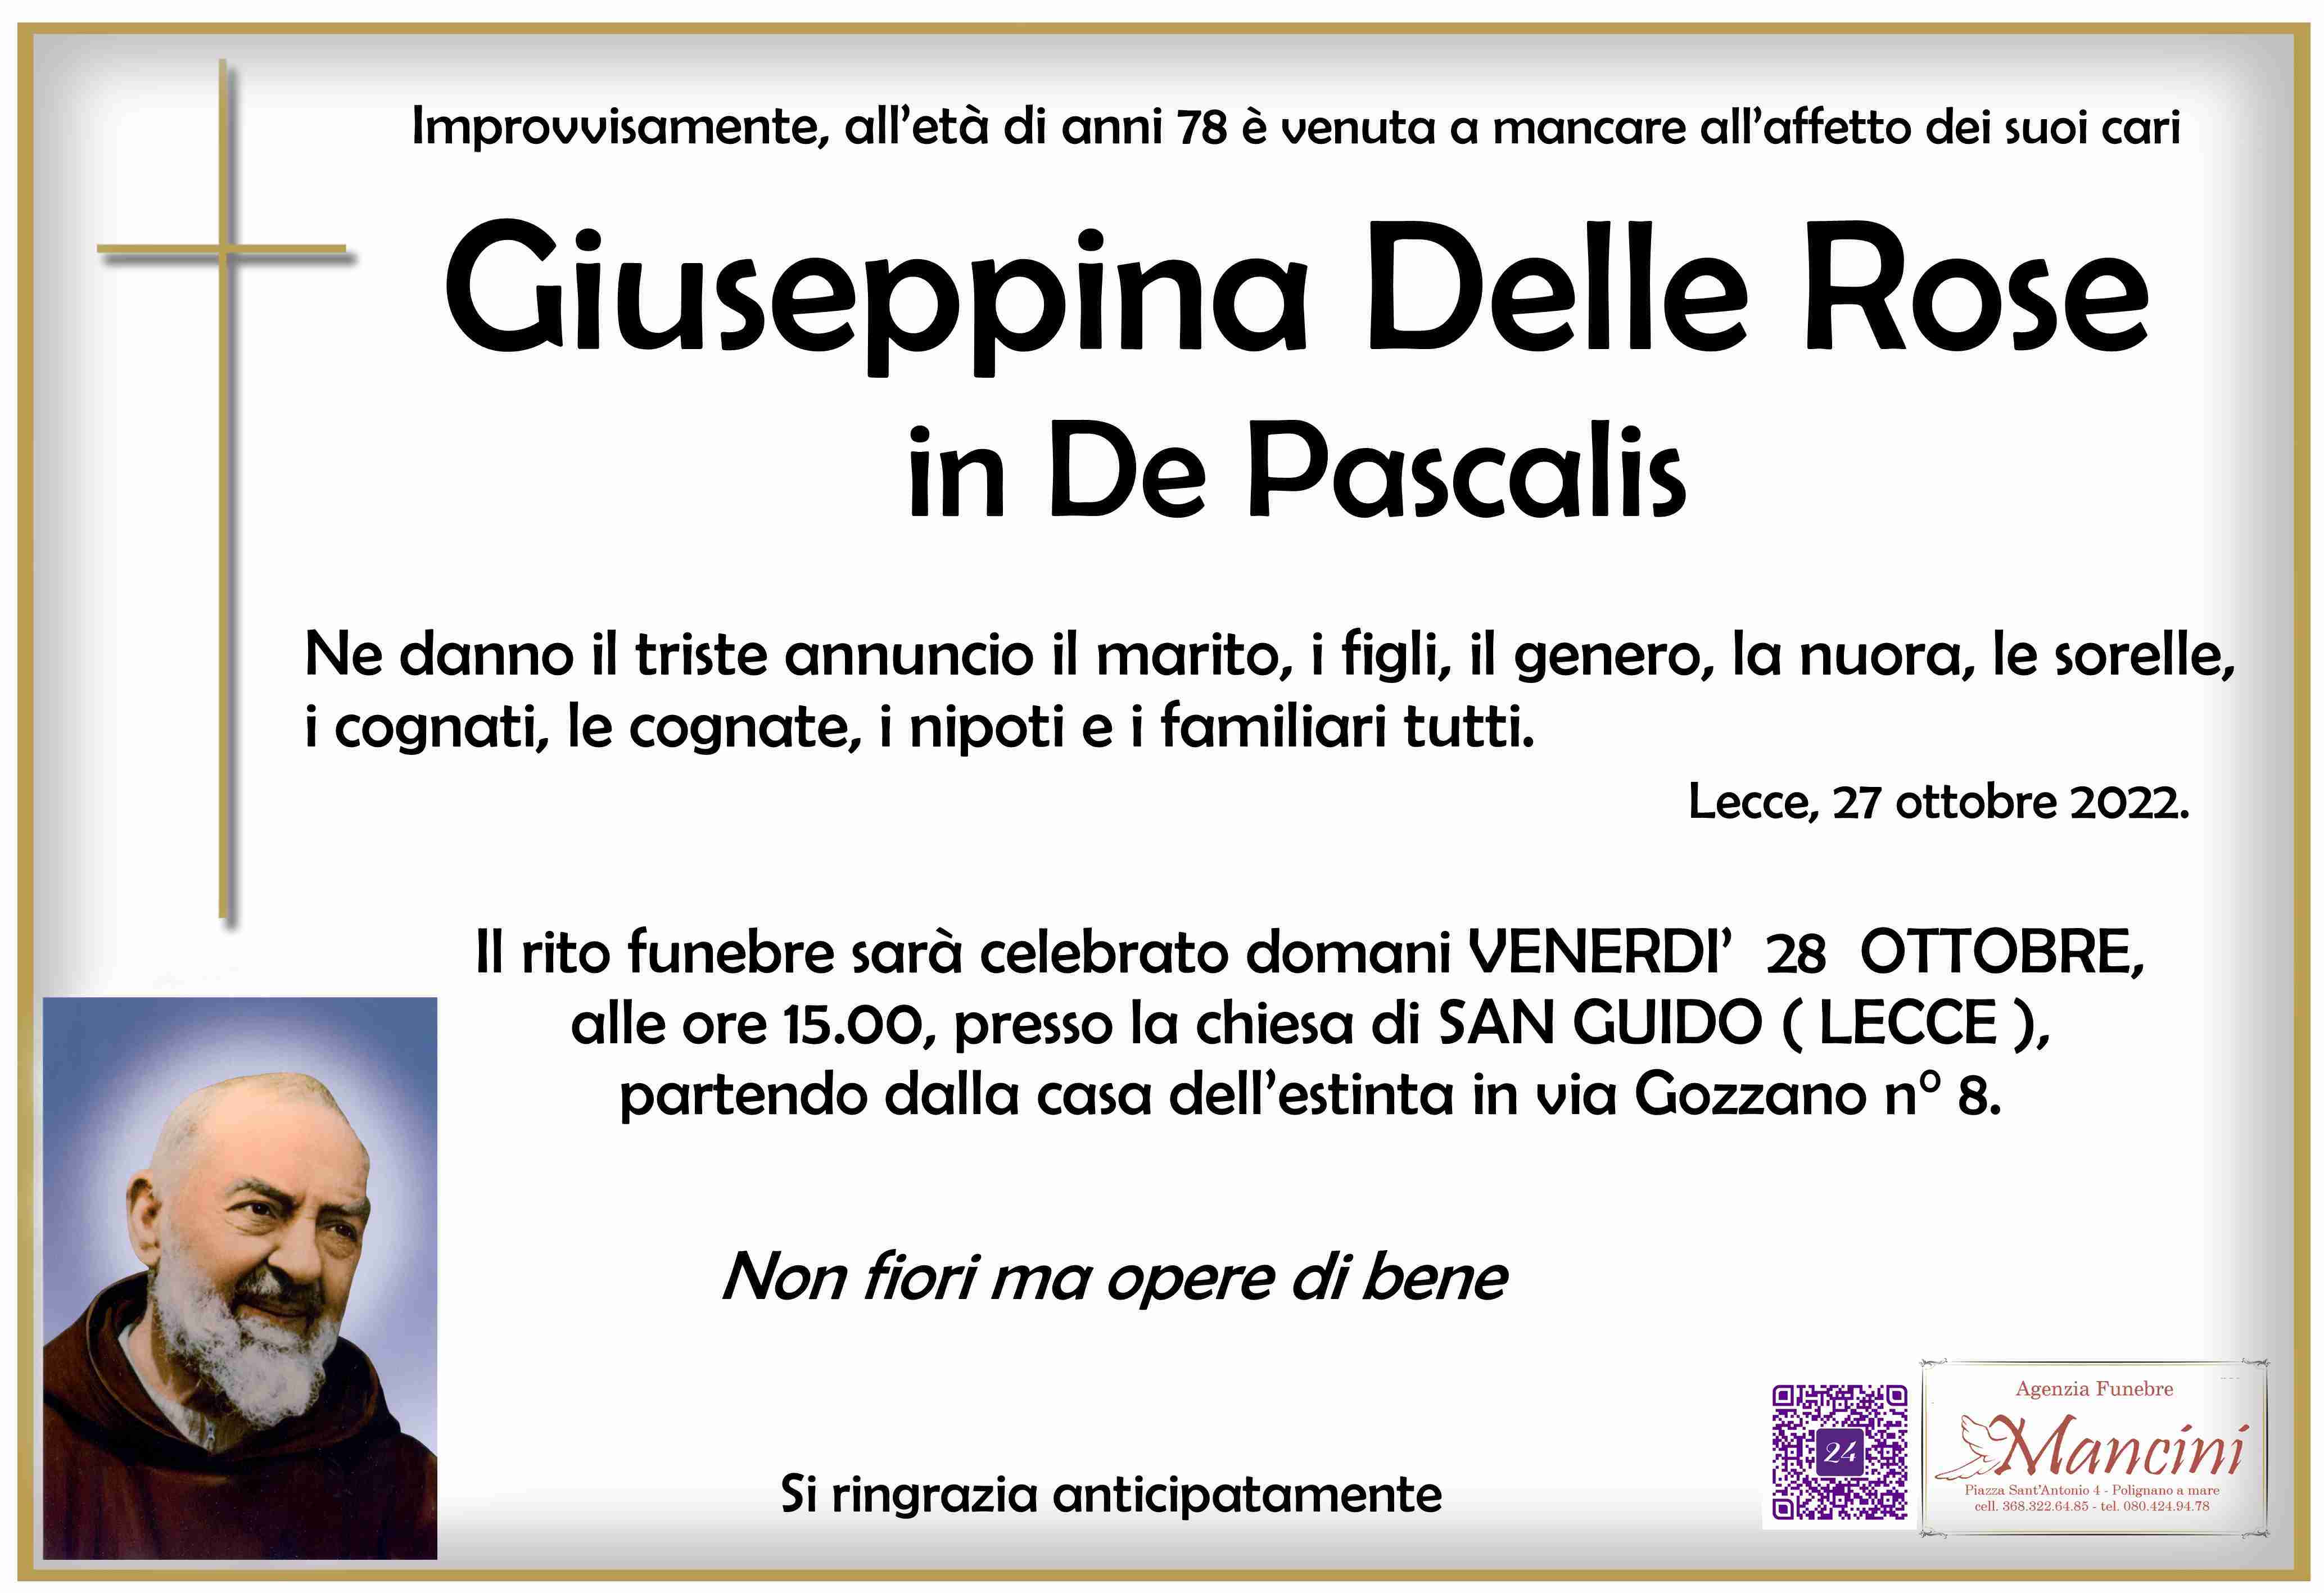 Giuseppina Delle Rose